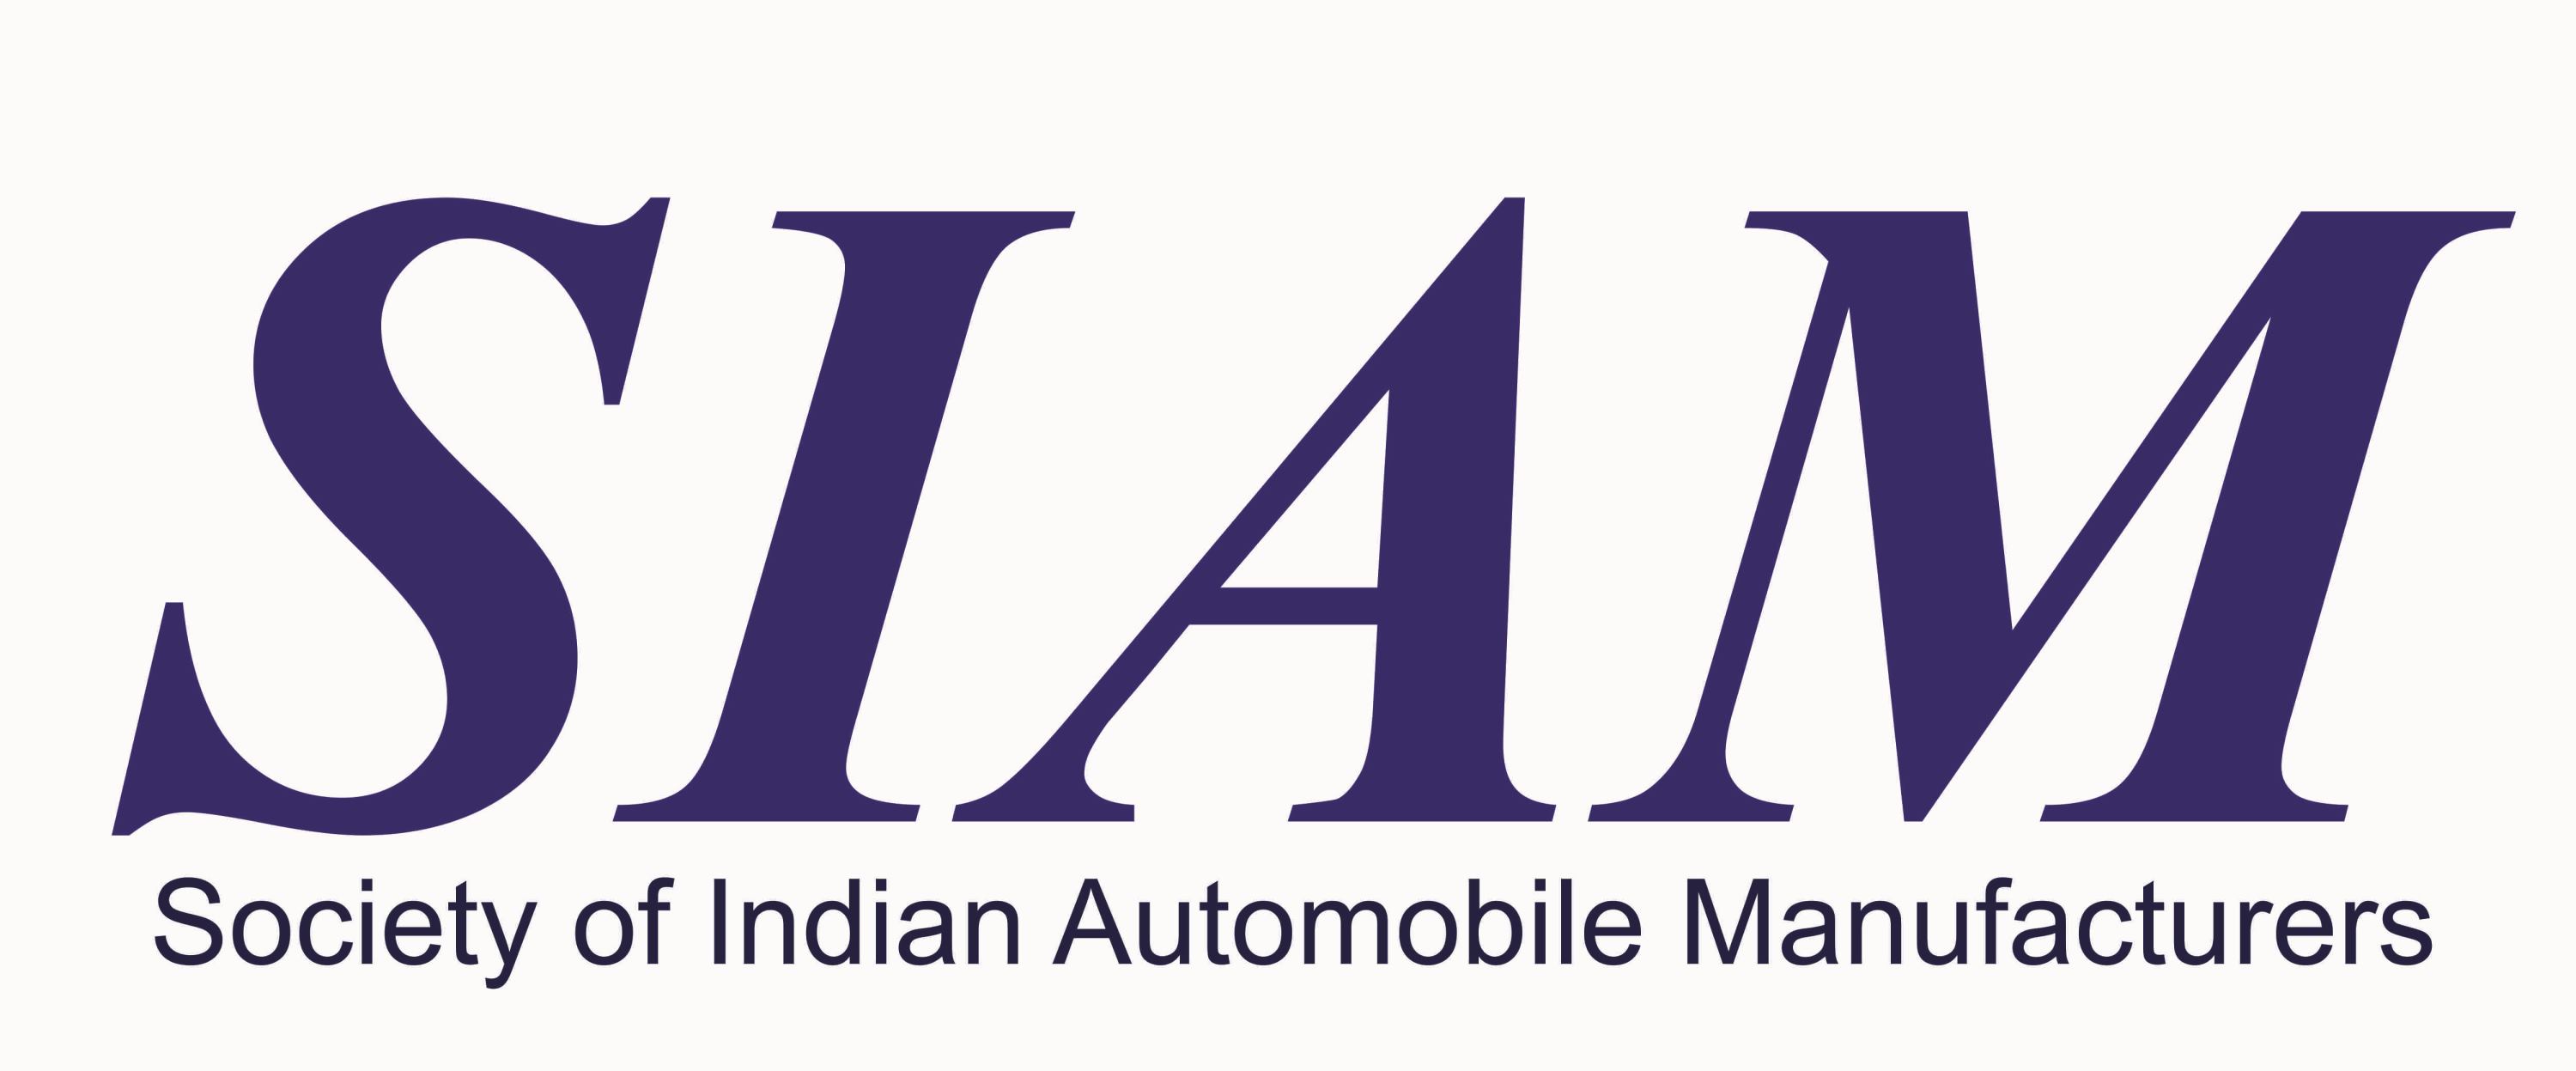 Indian Automobile Manufacturers (SIAM),